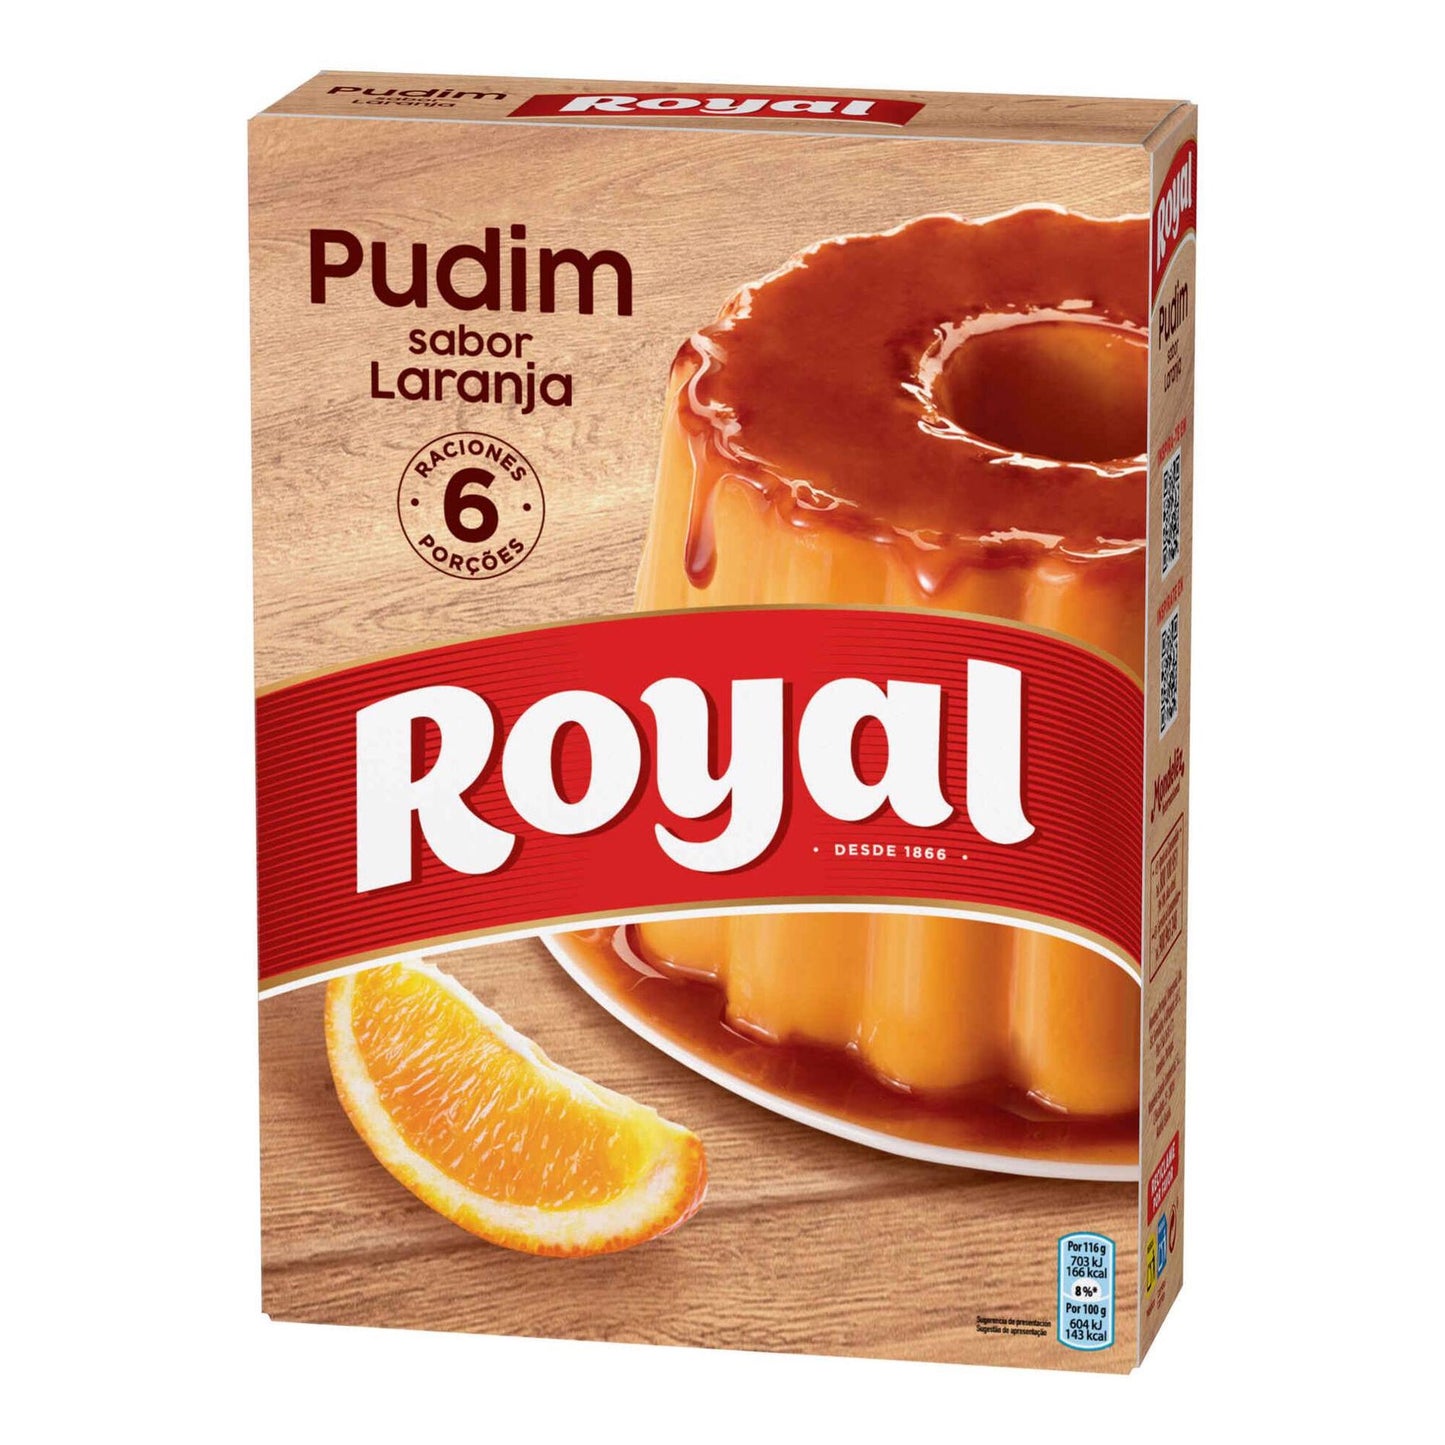 Prepared for Homemade Orange Pudding Royal 200g